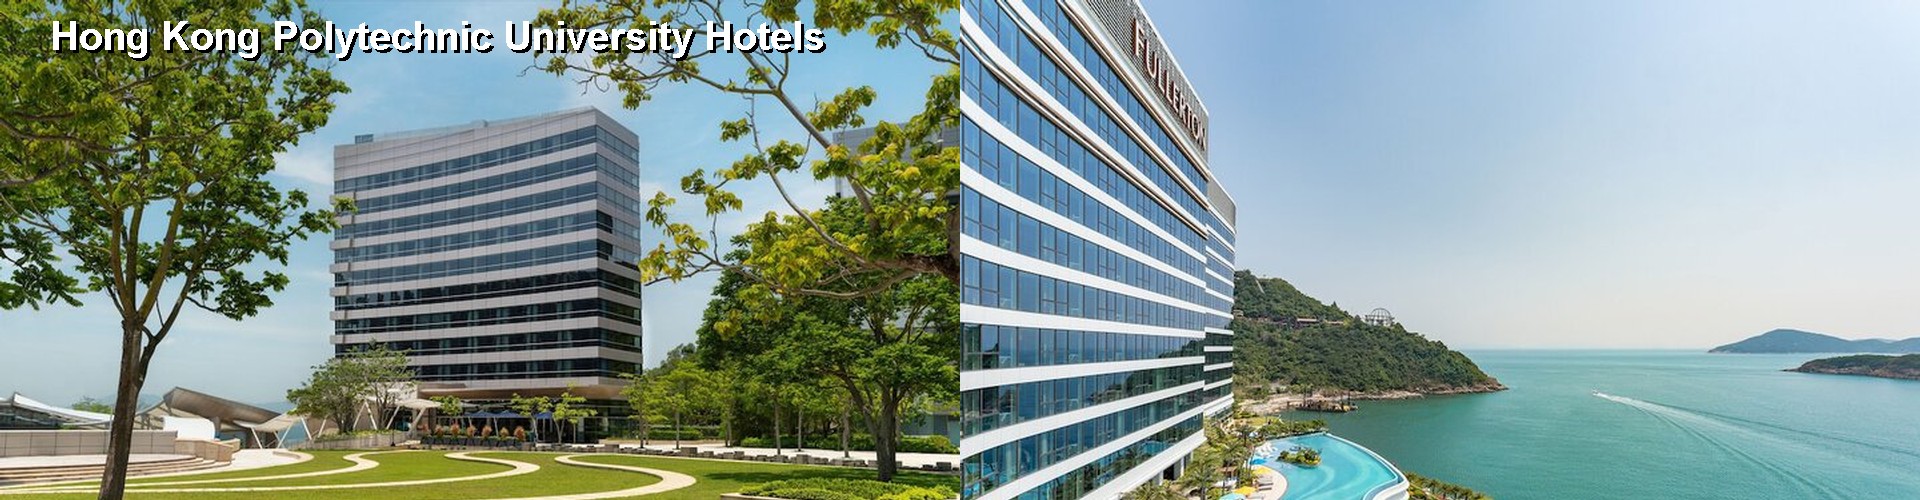 5 Best Hotels near Hong Kong Polytechnic University